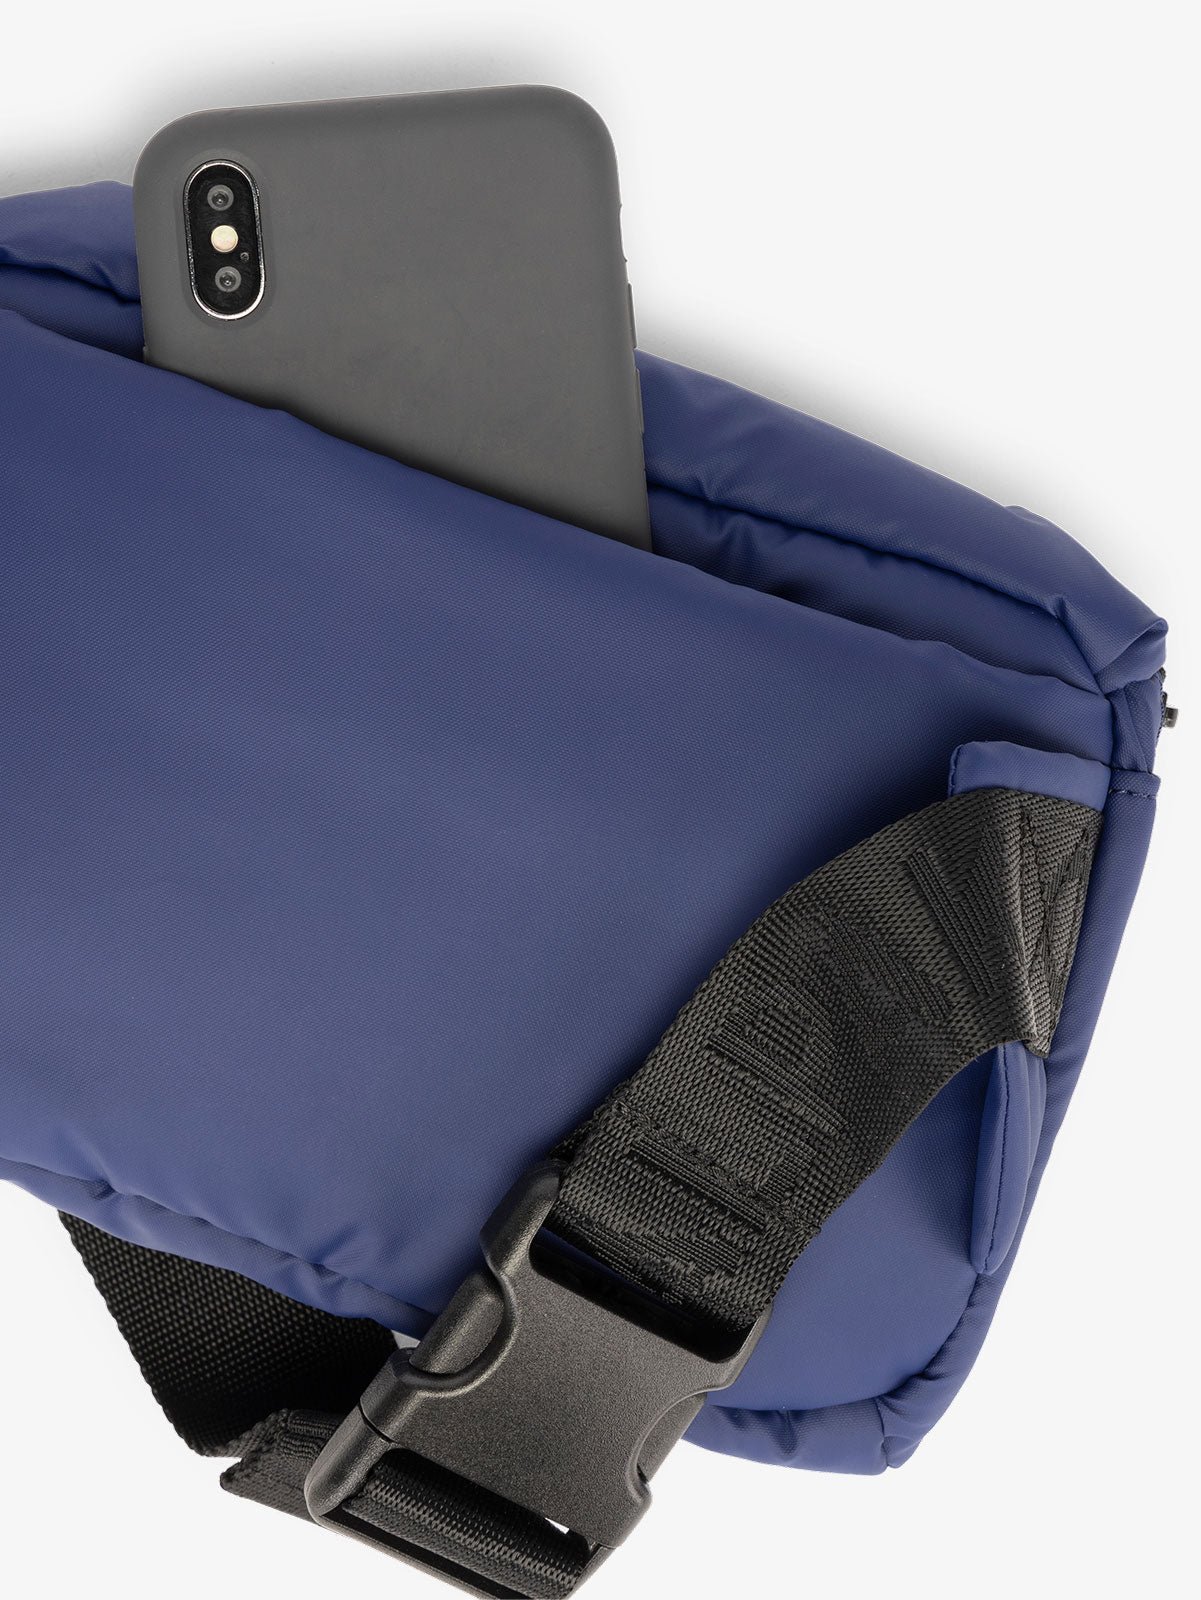 CALPAK Luka small waist bag with adjustable strap and back pocket in dark navy blue